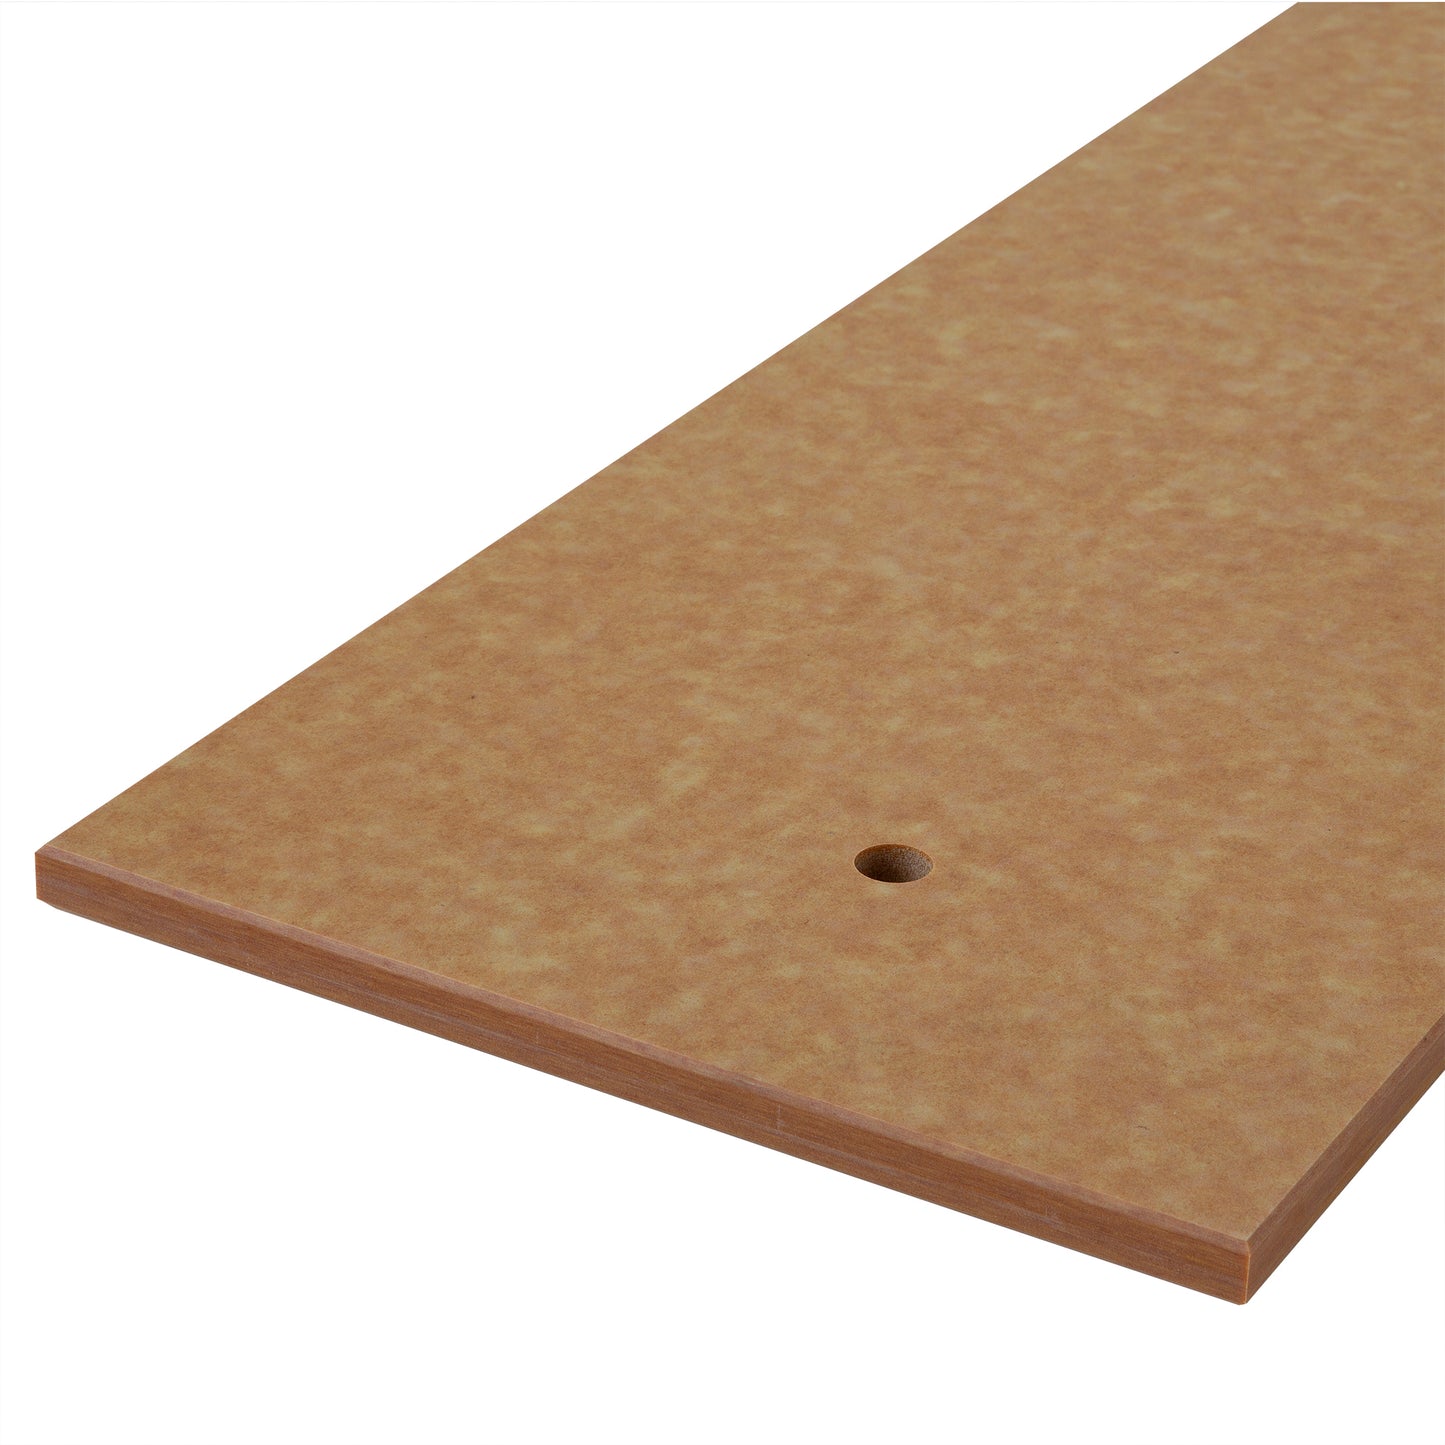 Composite wood-tone cutting board - 1/2" X 8-7/8" X 36-1/4" (SKU - 807770)